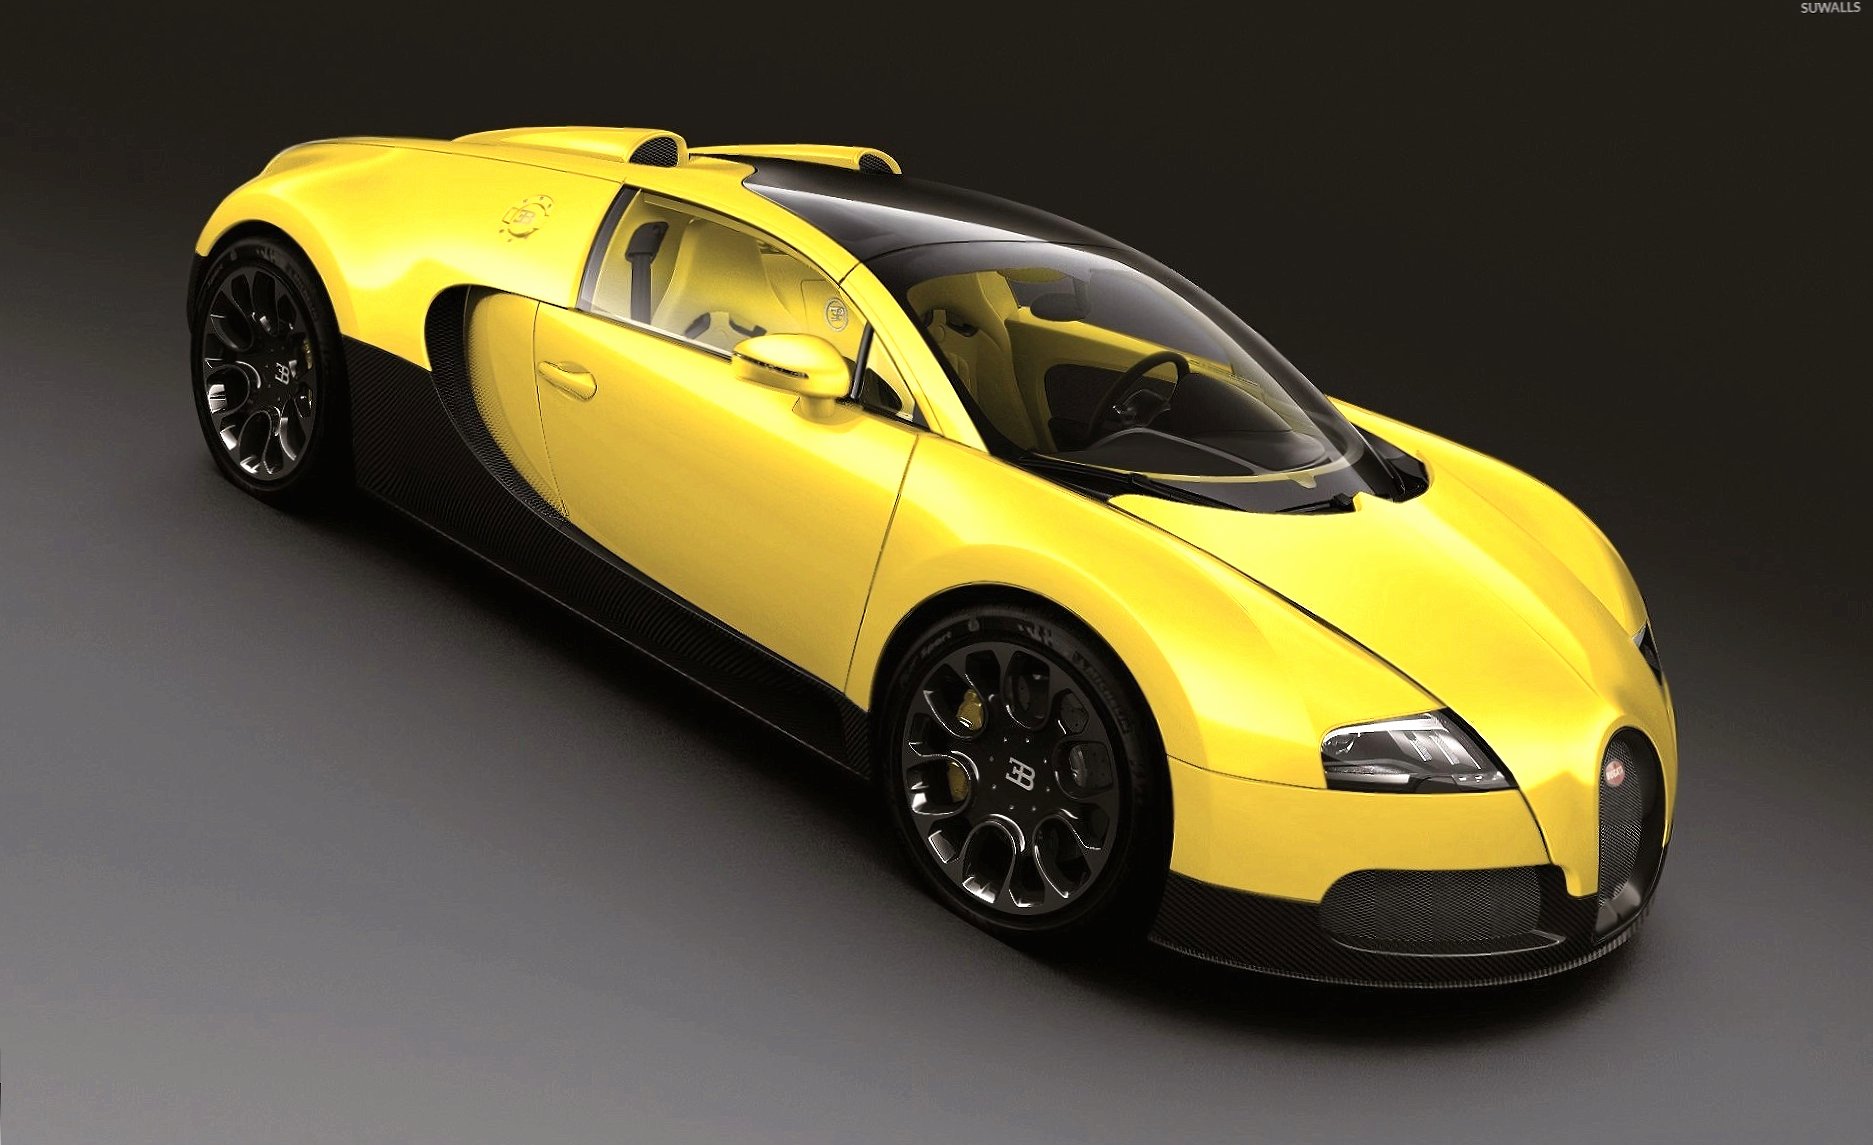 Yellow Bugatti Veyron top view wallpapers HD quality